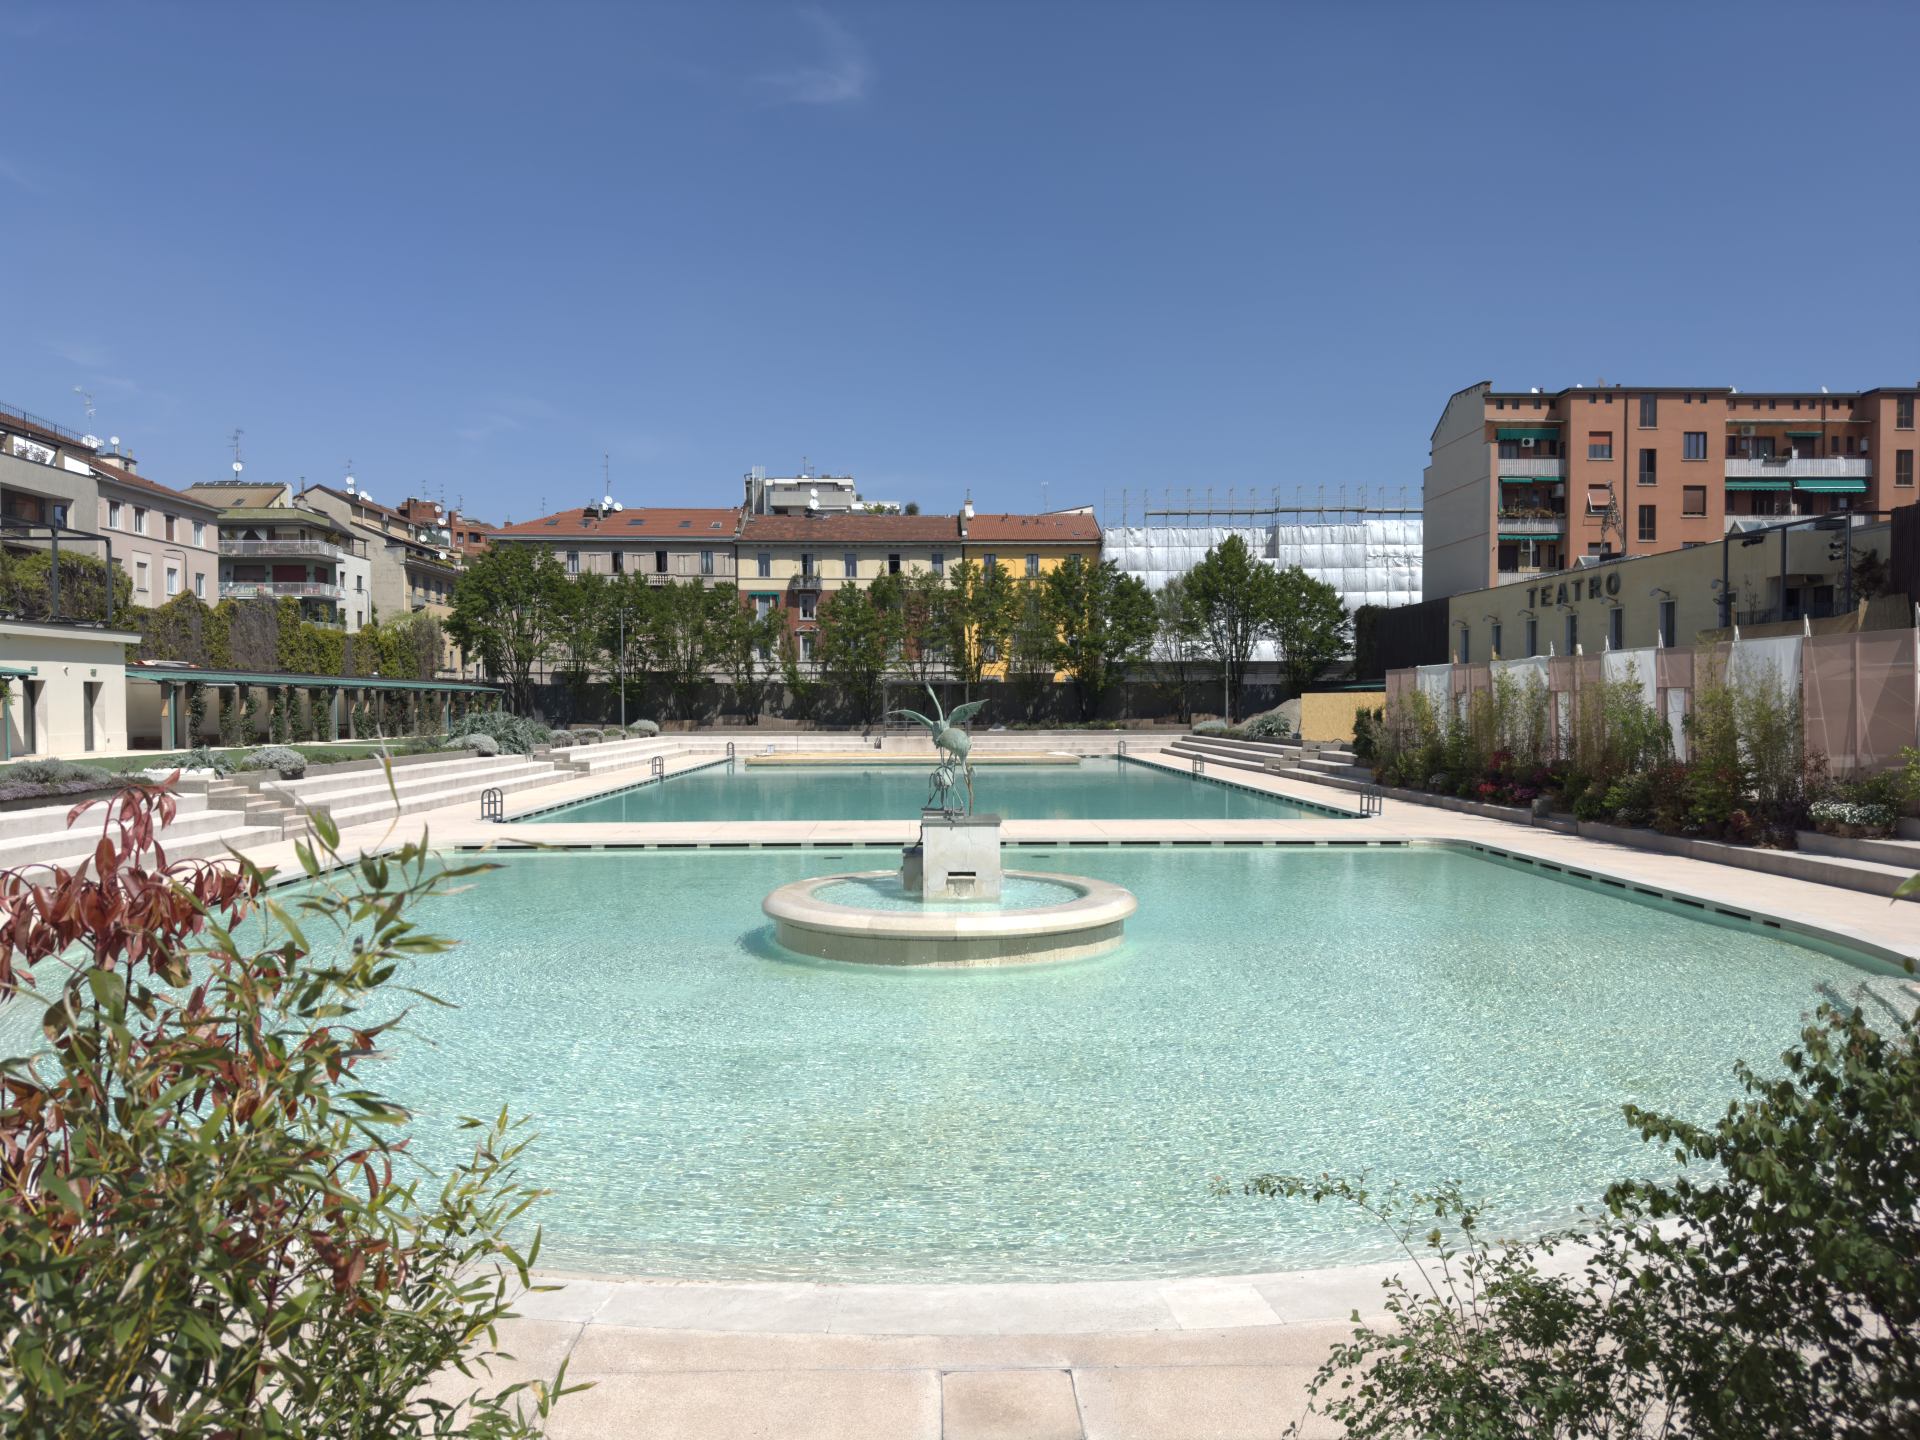 Bagni Misteriosi, piscina pública de Milão